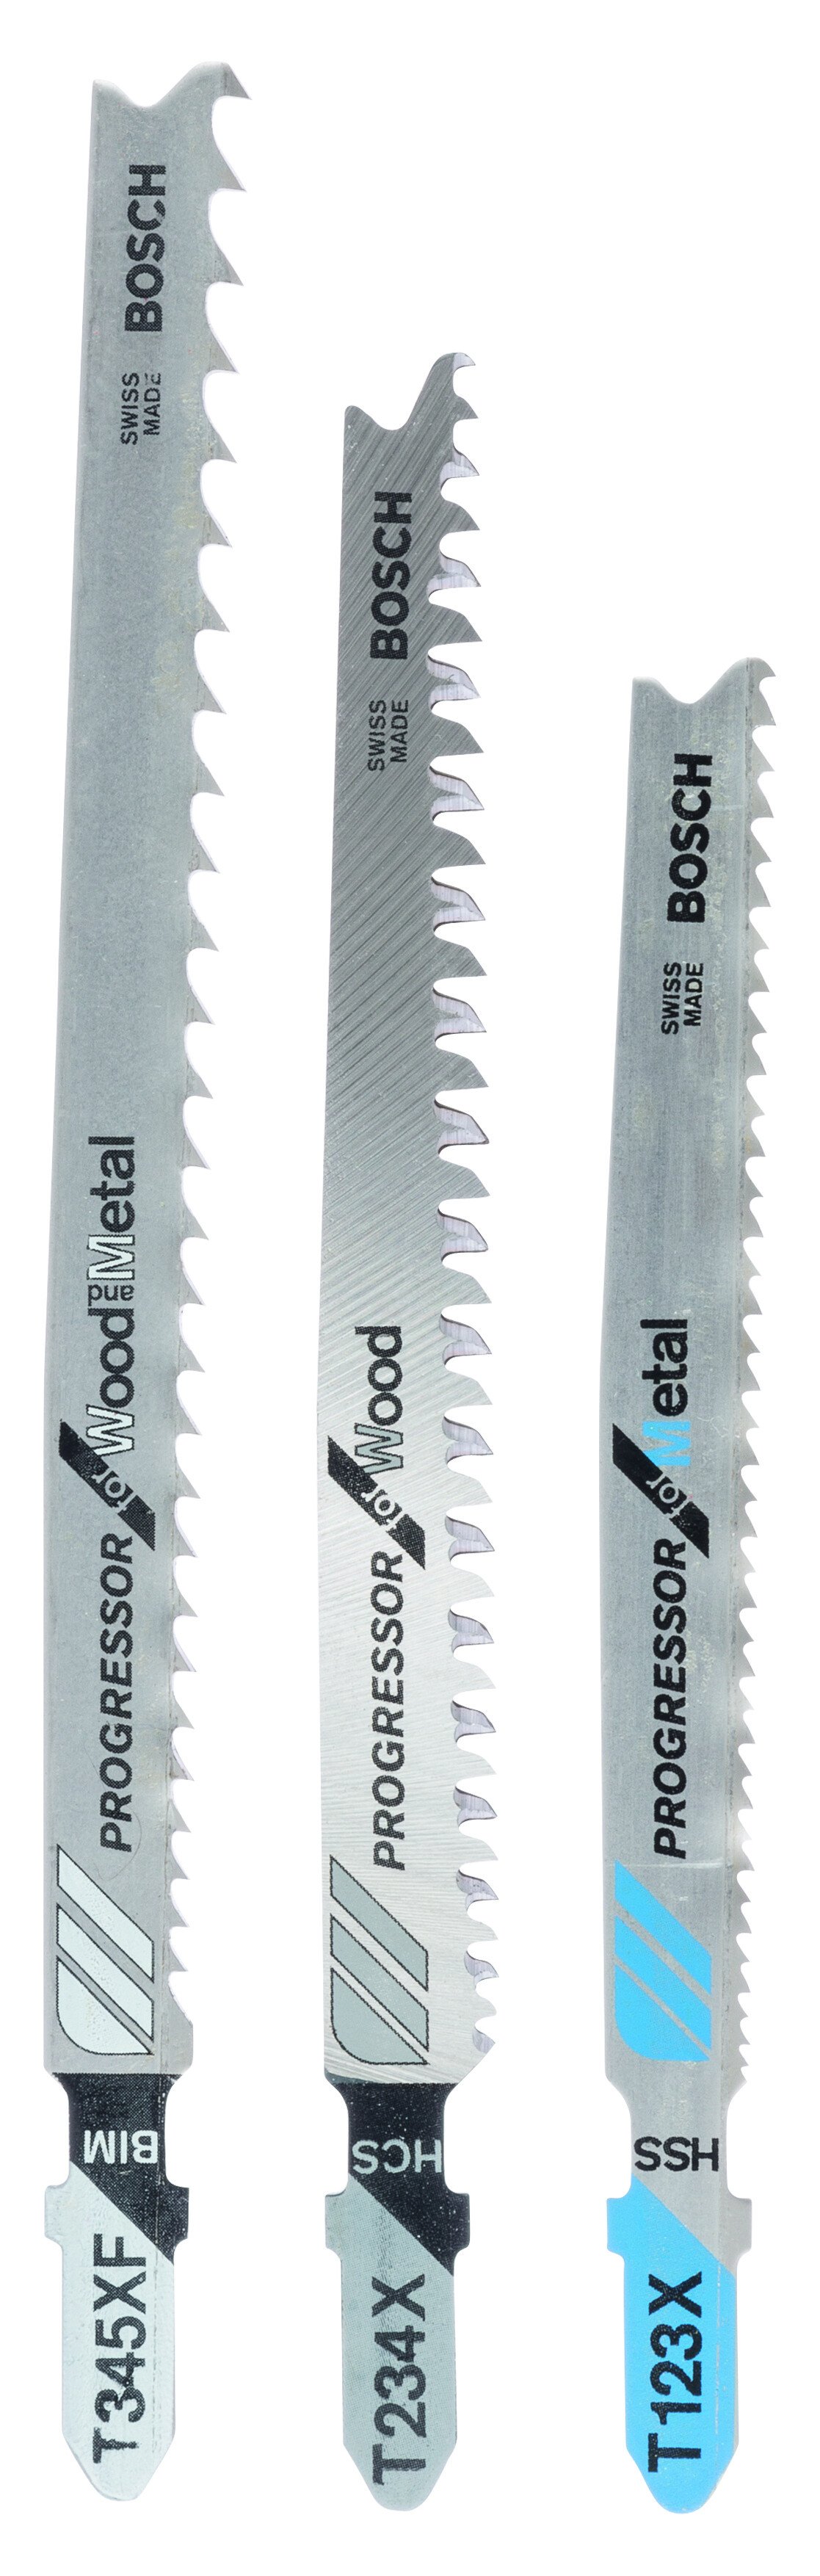 Bosch 2607010515 Jigsaw blades 3 blade assortment for wood, plastic and metal